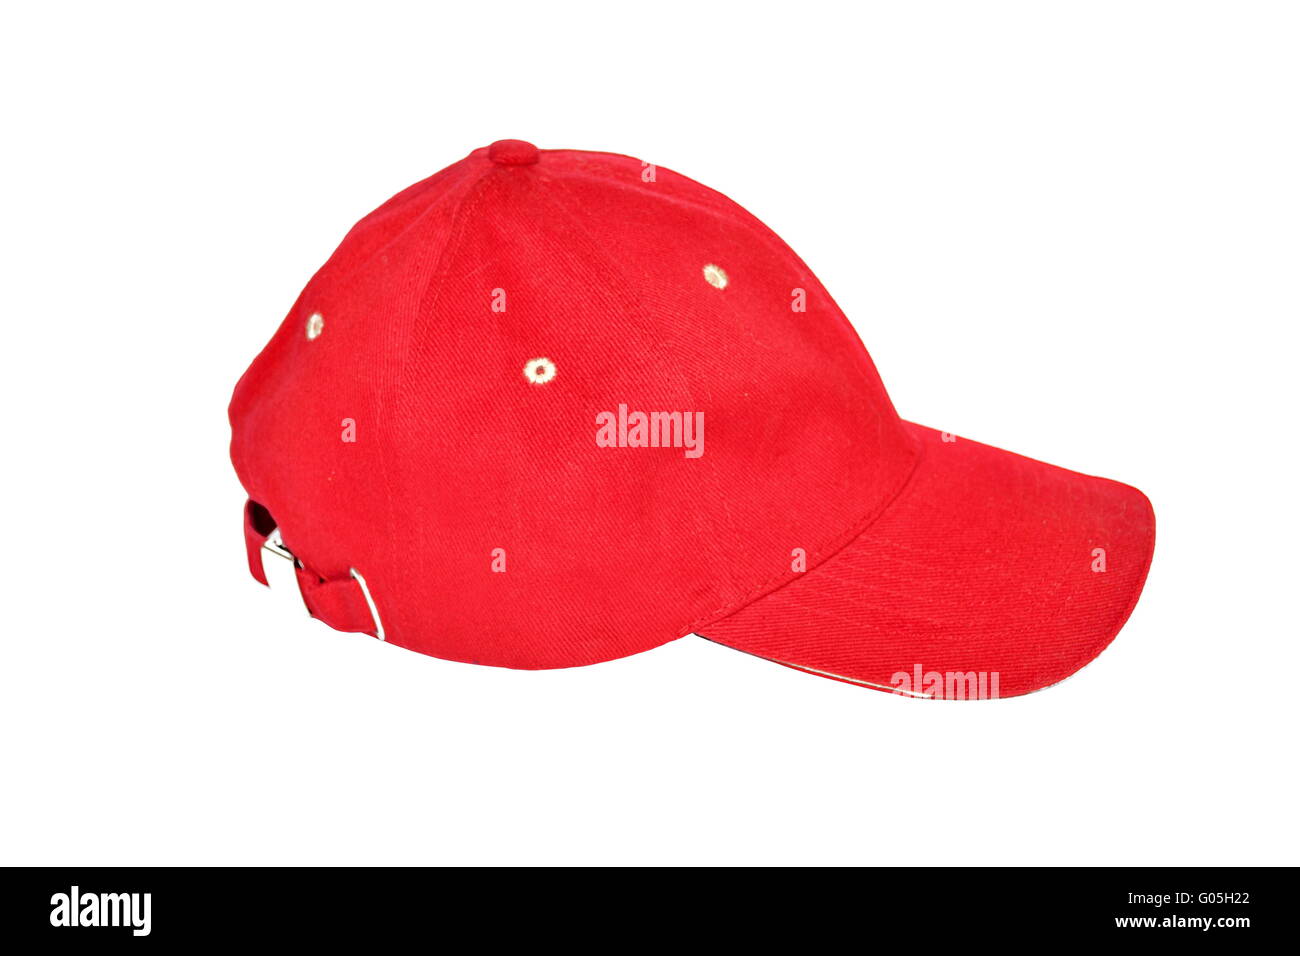 Red baseball cap Stock Photo - Alamy